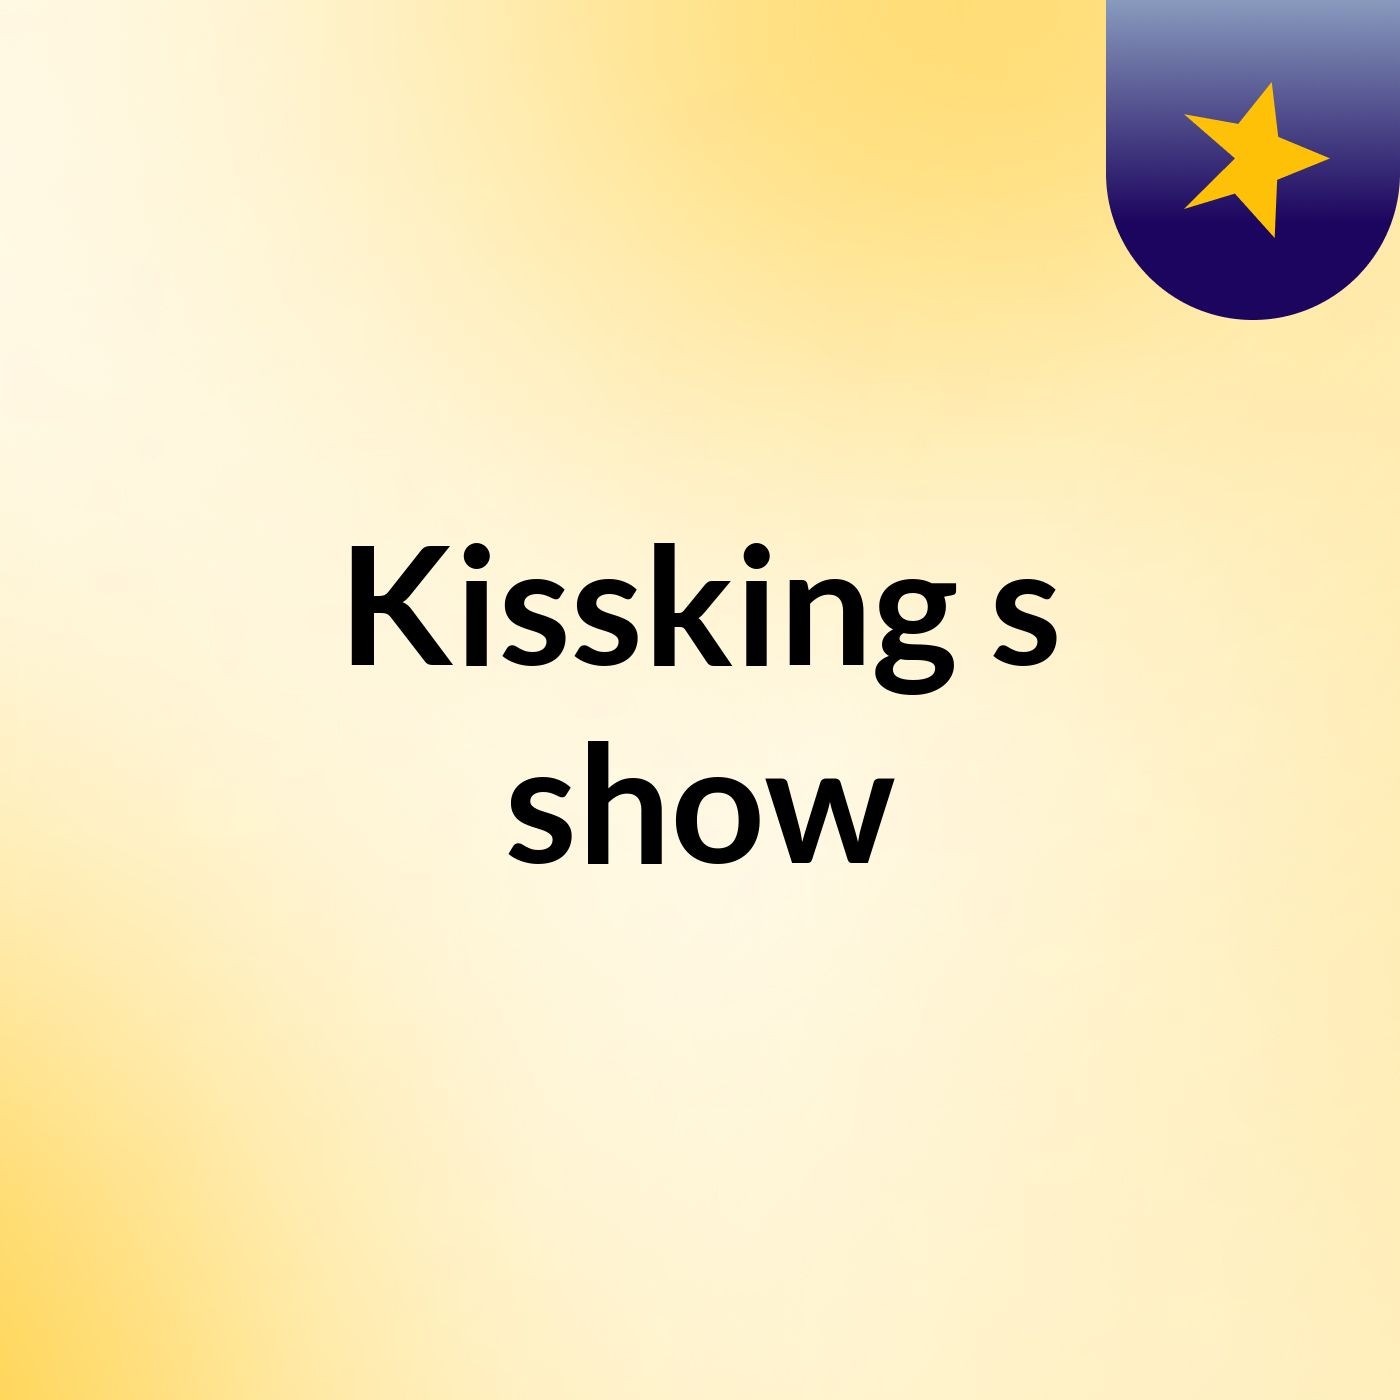 Kissking's show